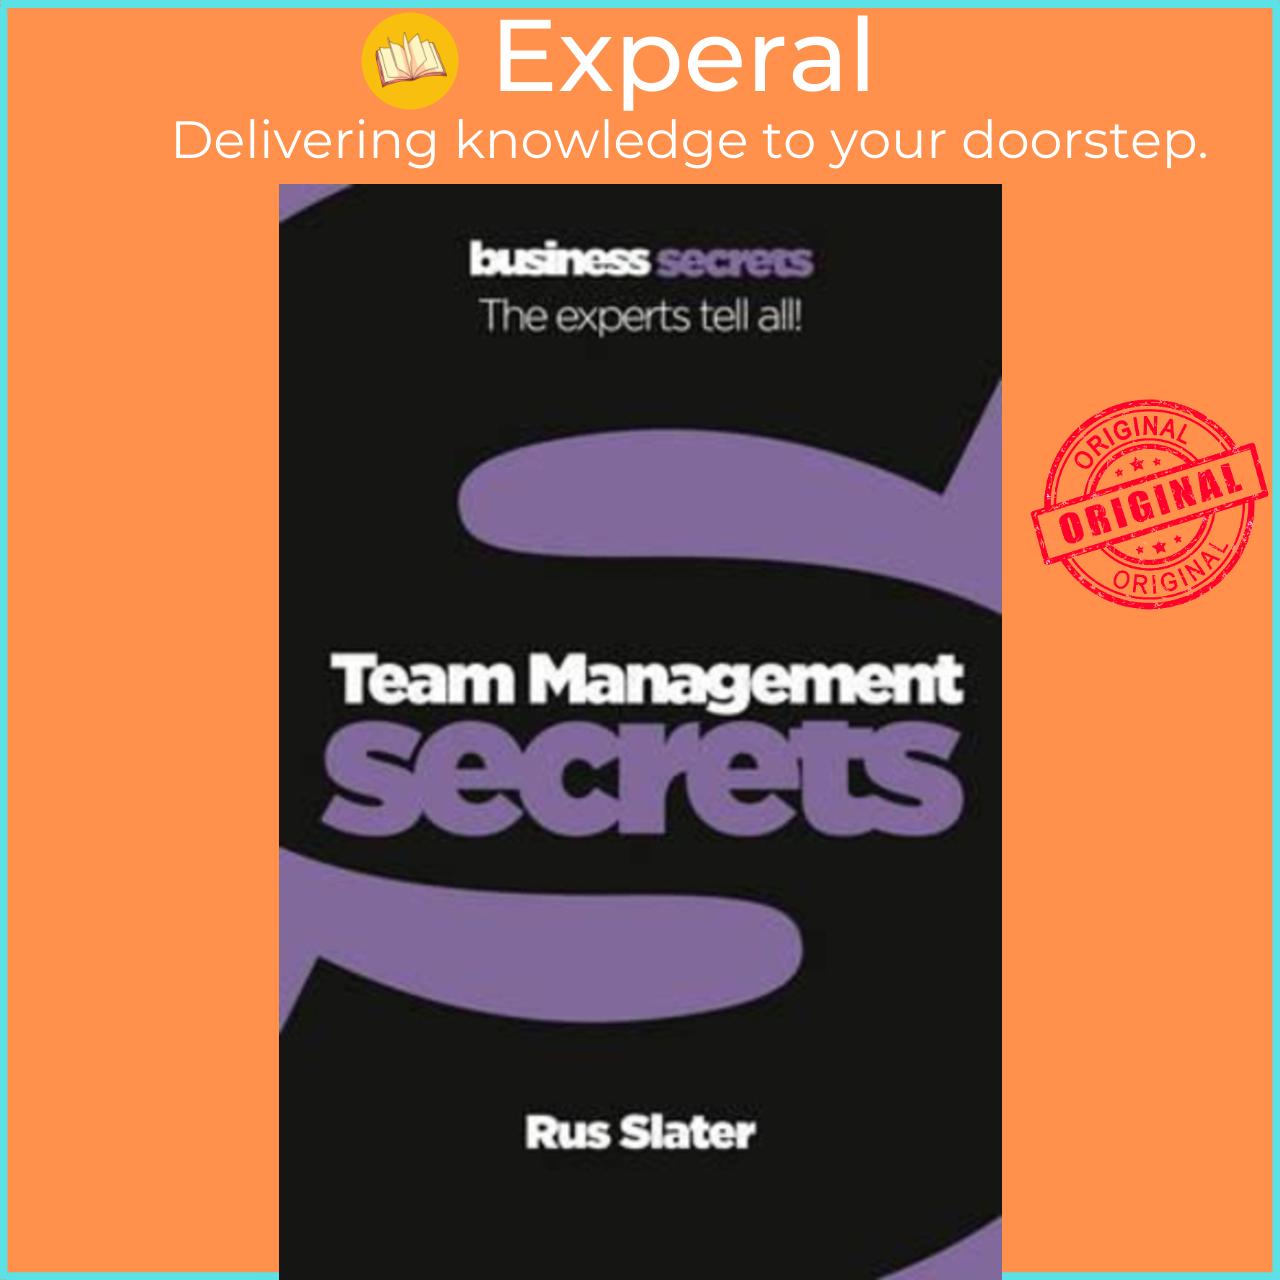 Hình ảnh Sách - Team Management (Collins Business Secrets) by Rus Slater (UK edition, paperback)